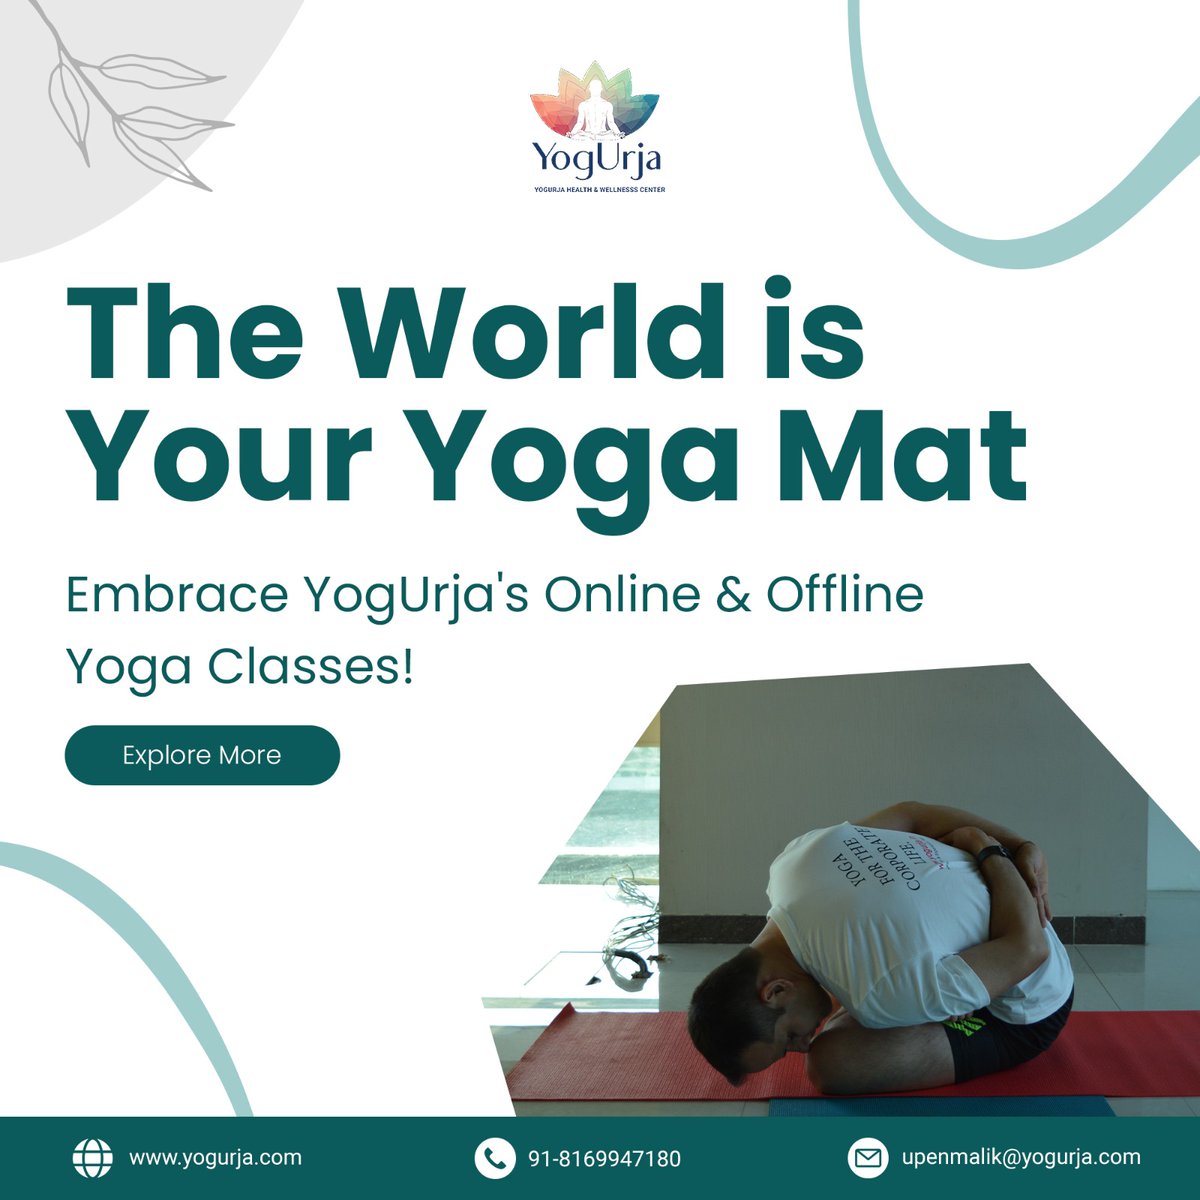 Embrace the world as your yoga mat with YogUrja!

Join us for transformative online and offline yoga classes that transcend boundaries and connect you to the power of yoga wherever you are. 

#YogUrja #YogaCommunity #YogaJourney #YogaEverywhere #GlobalWellness #MindBodySpirit